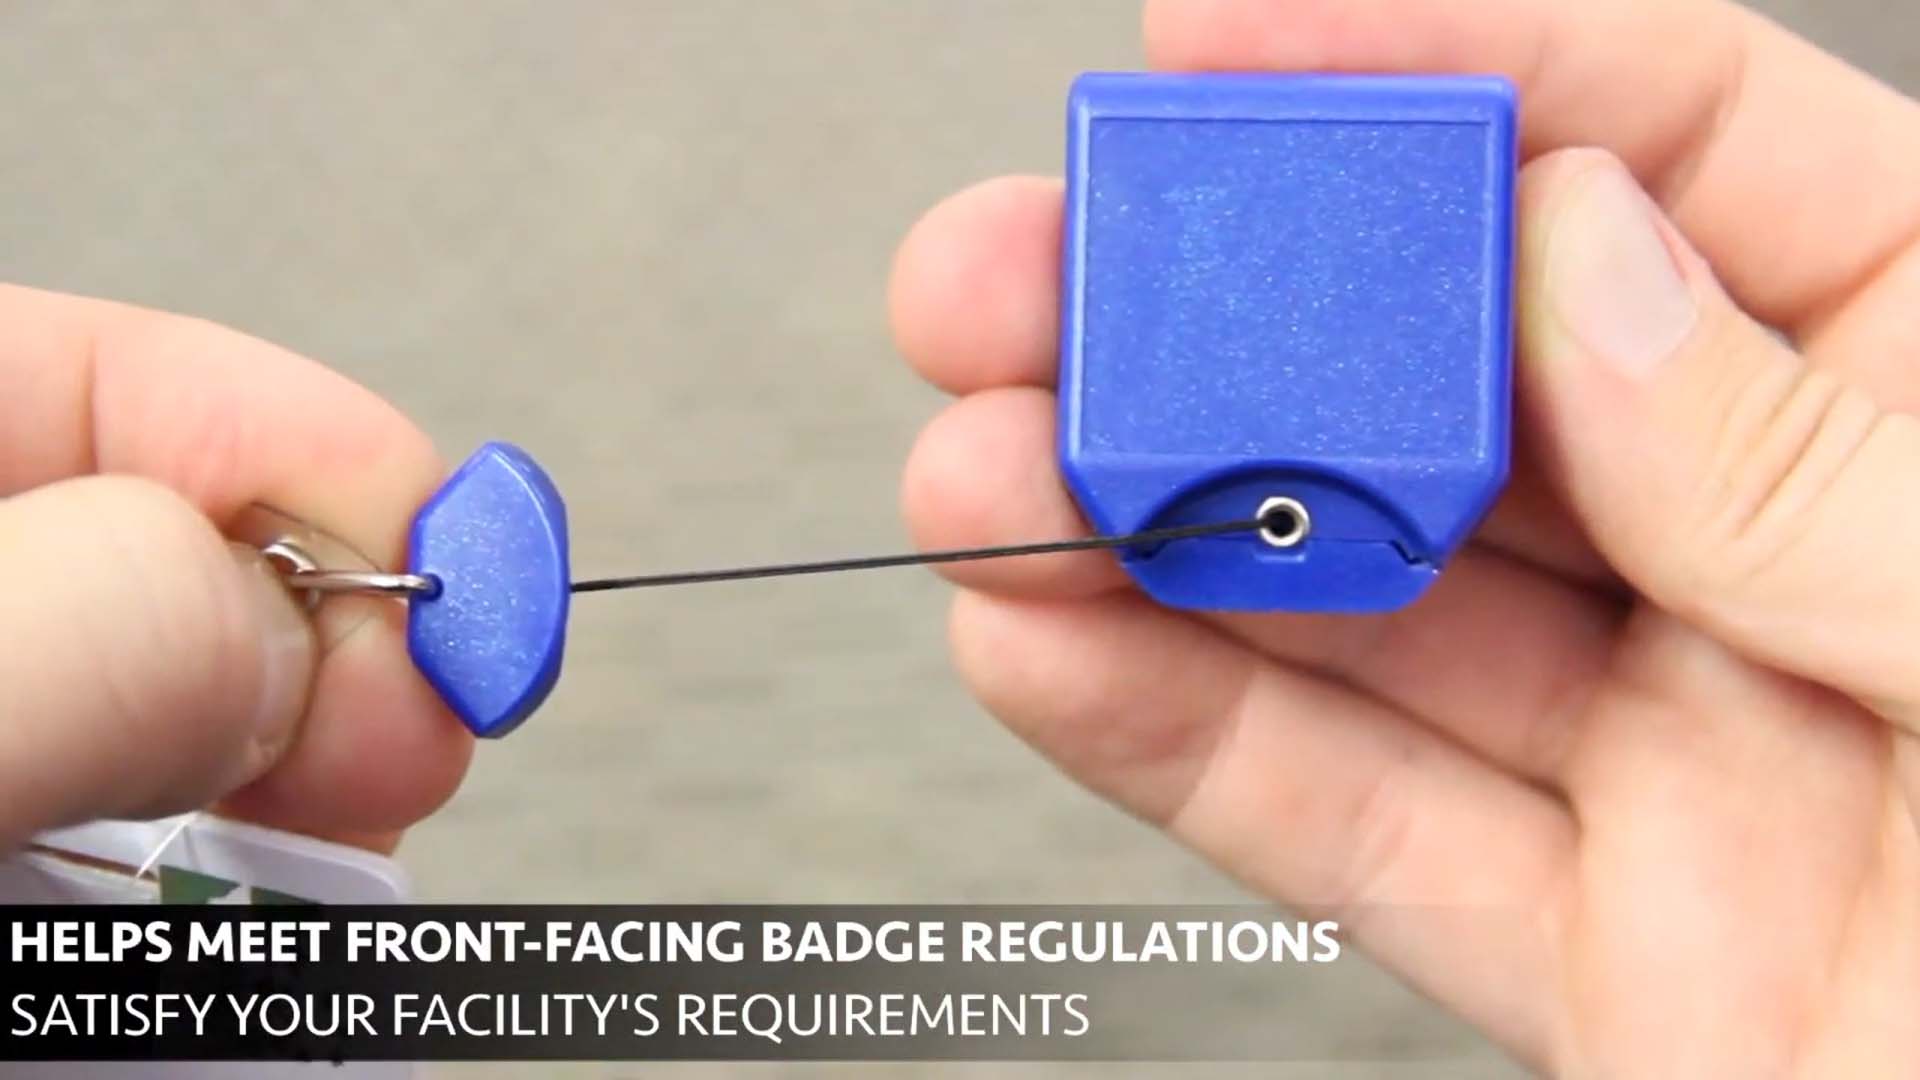 Non-Magnetic Round ID Retractable Badge Reel with Plastic Clip, MRI Safe, Twist Free (24 Cord) Metallic Blue